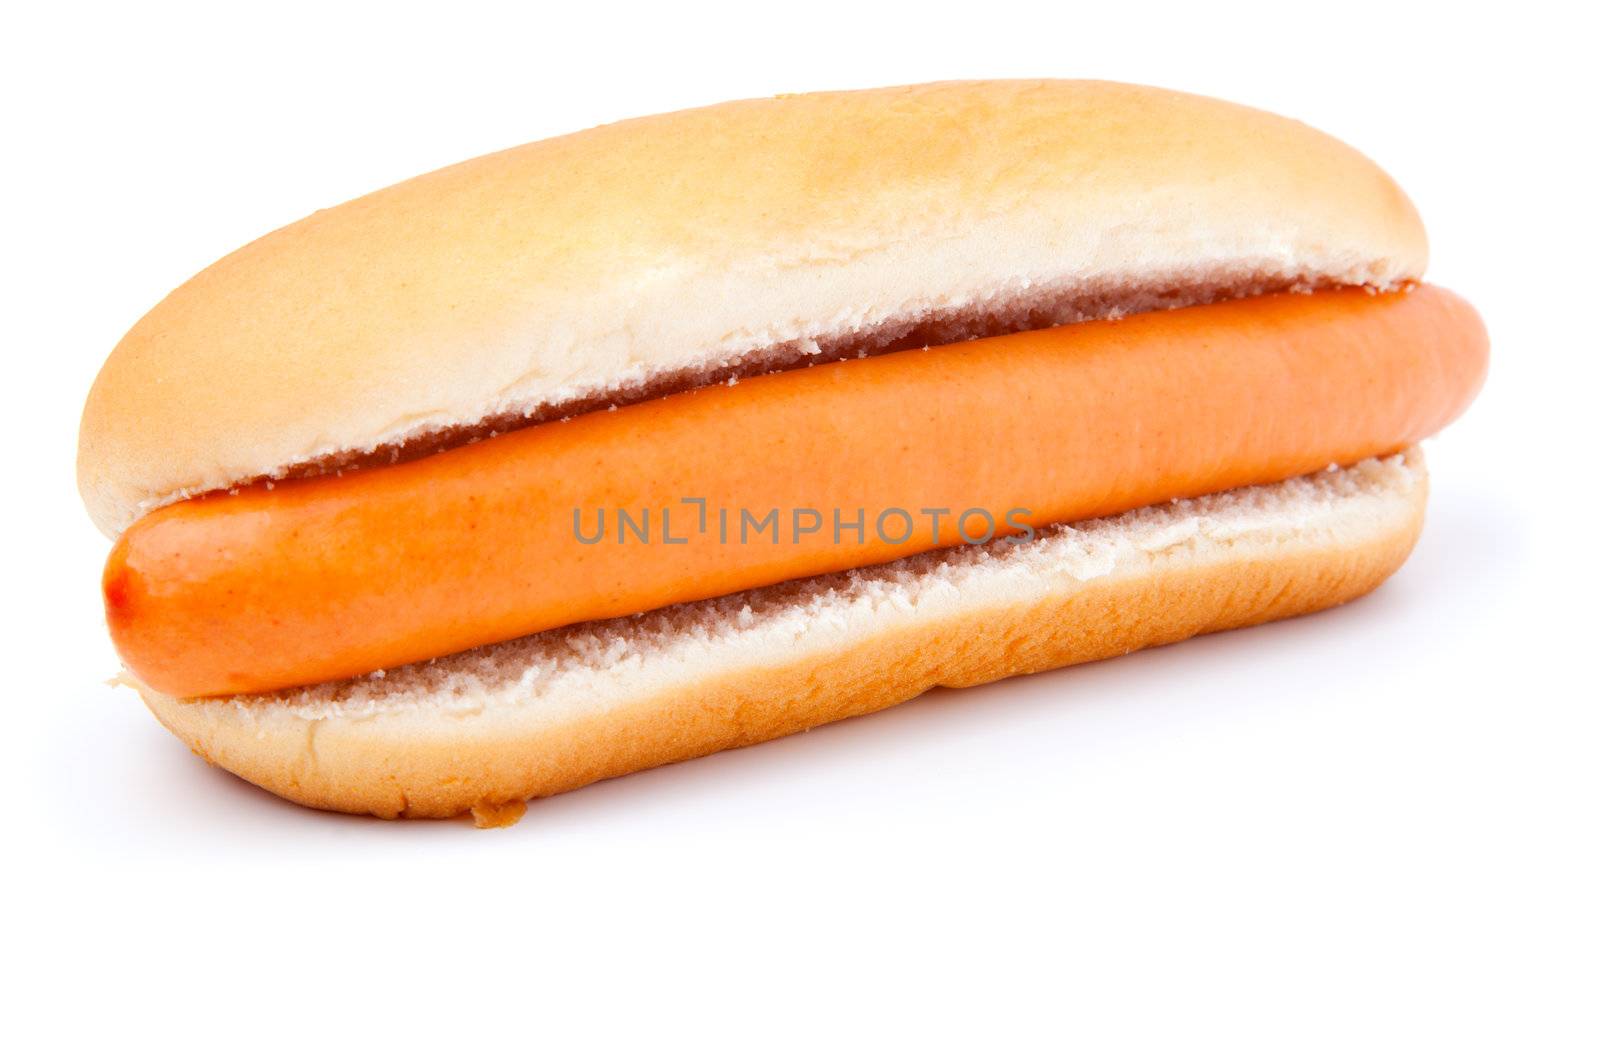 Hot dog on a white background 